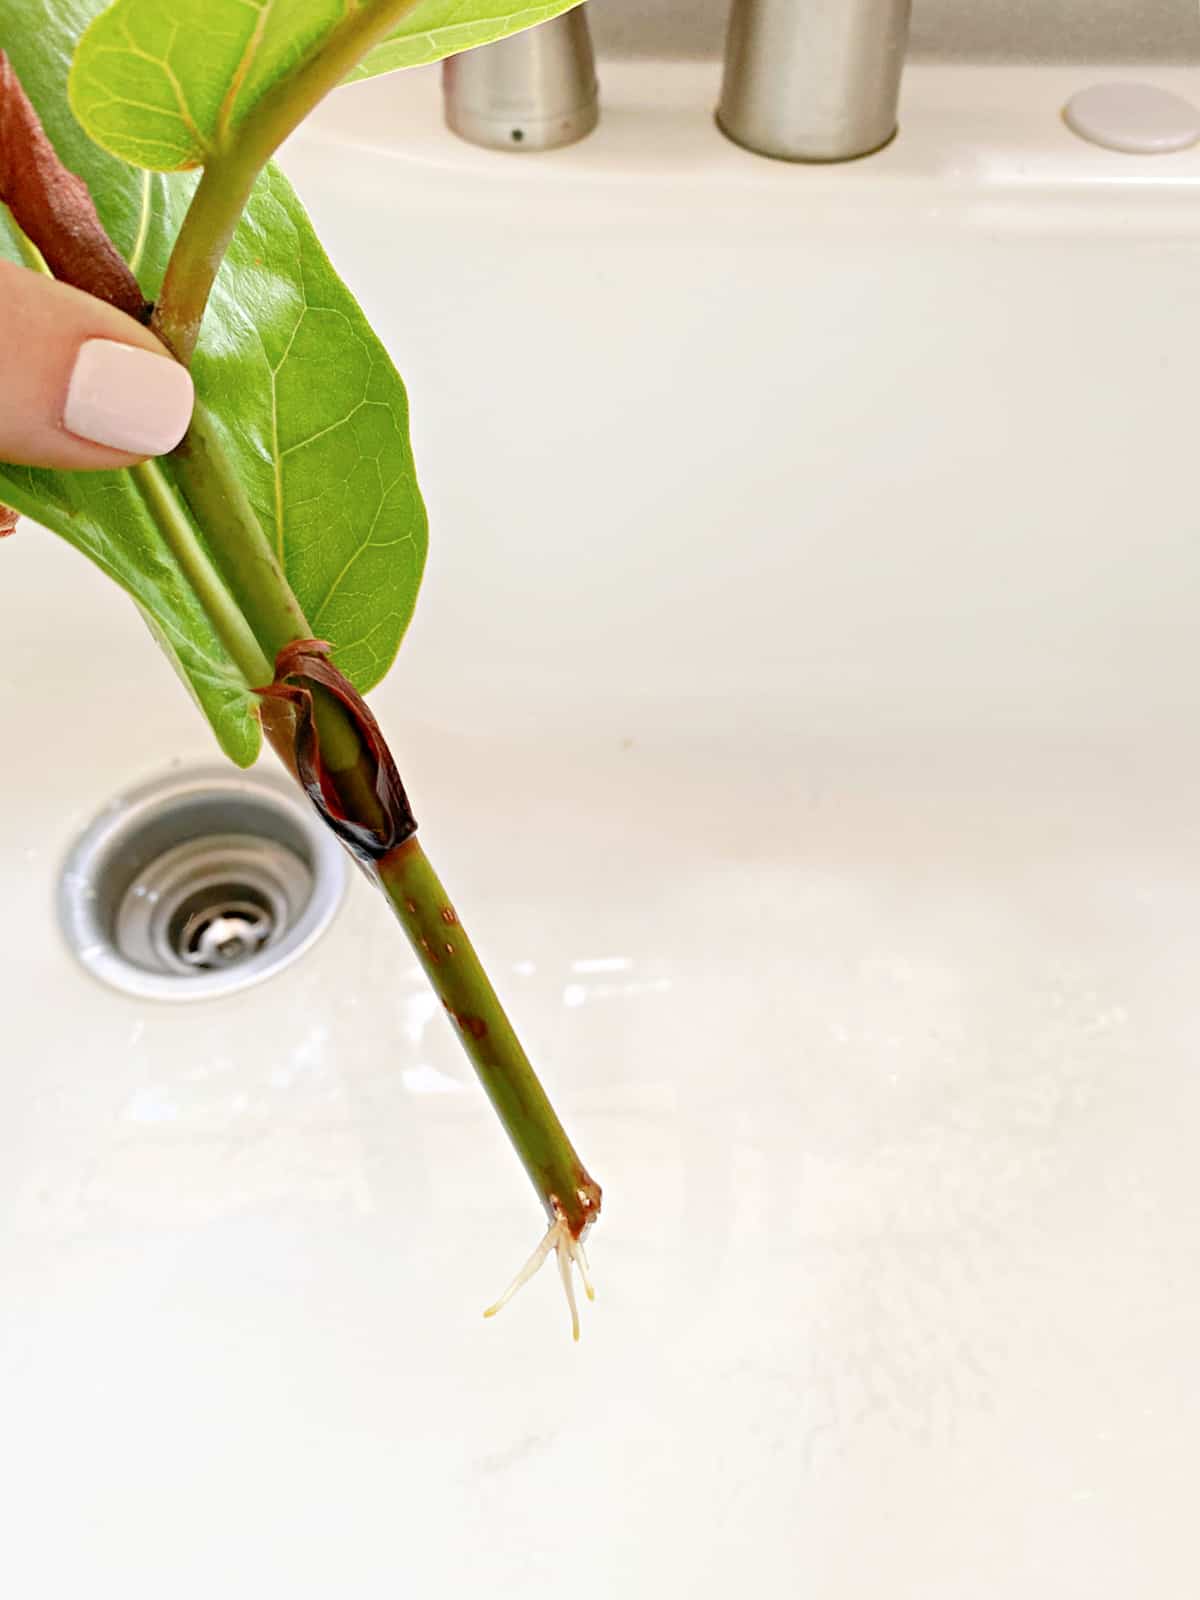 roots growing on stem of fiddle leaf fig